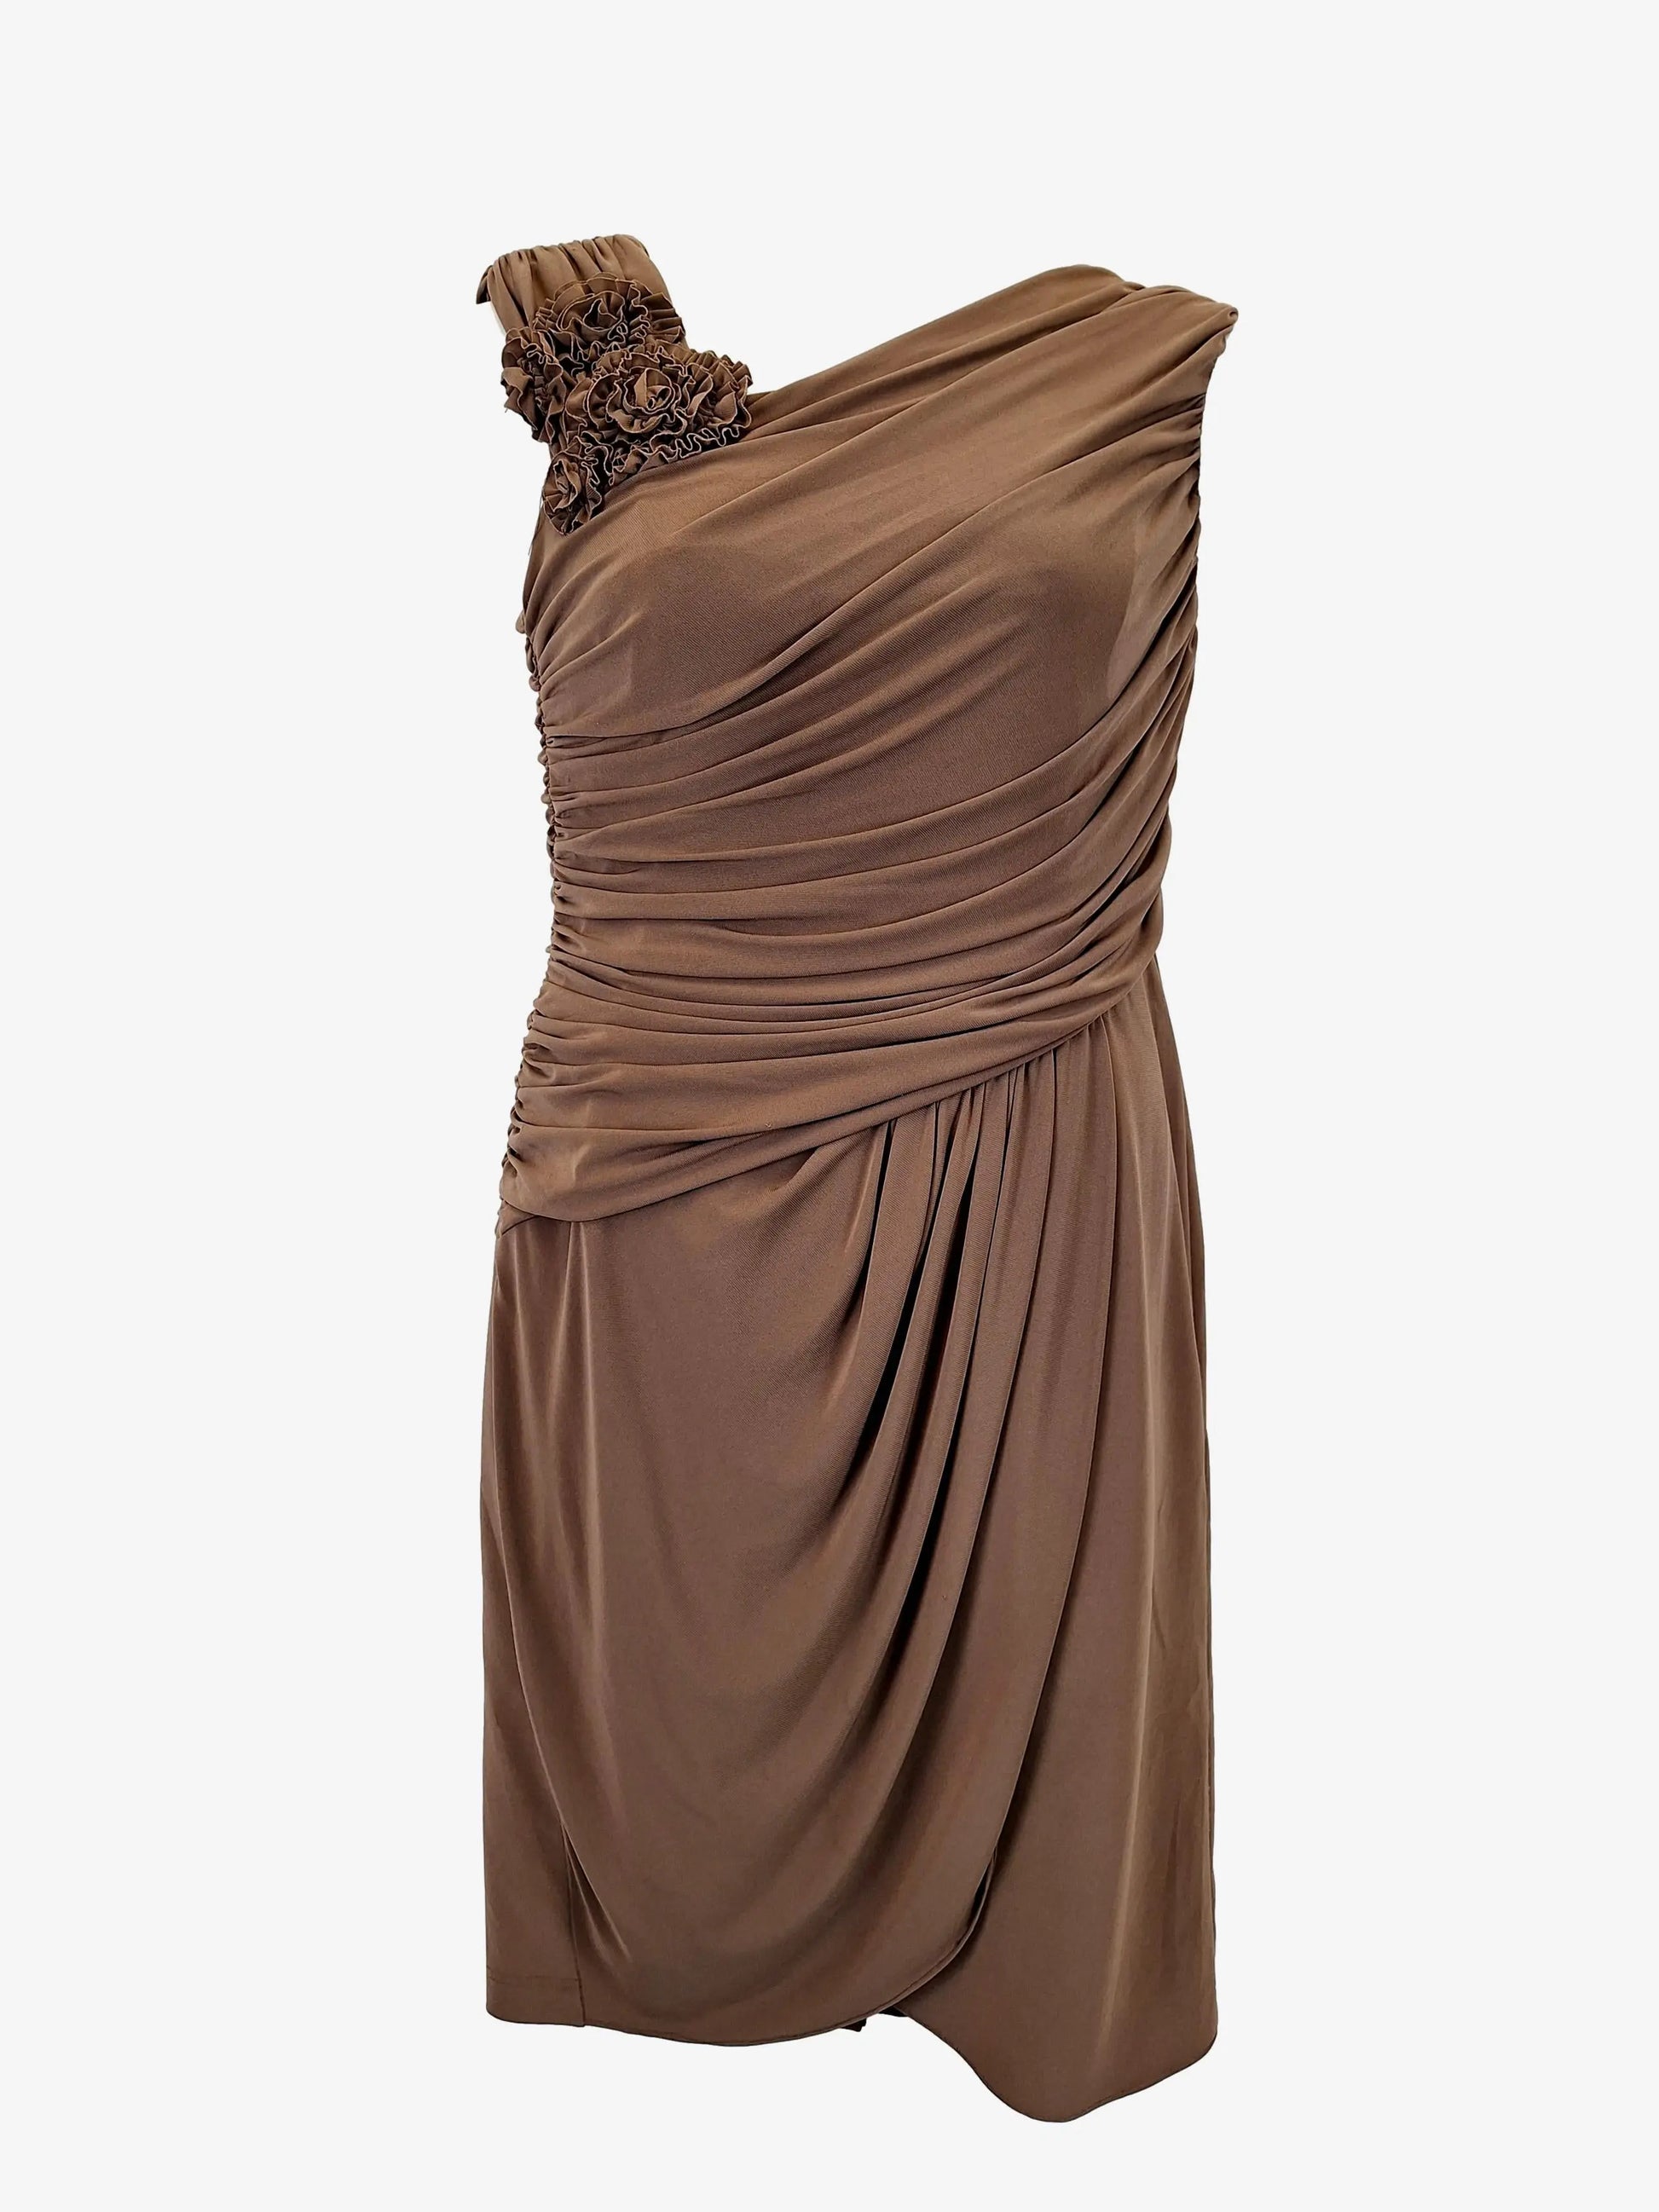 Liz Jordan Draped Cocktail Mini Dress Size 14 by SwapUp-Online Second Hand Store-Online Thrift Store